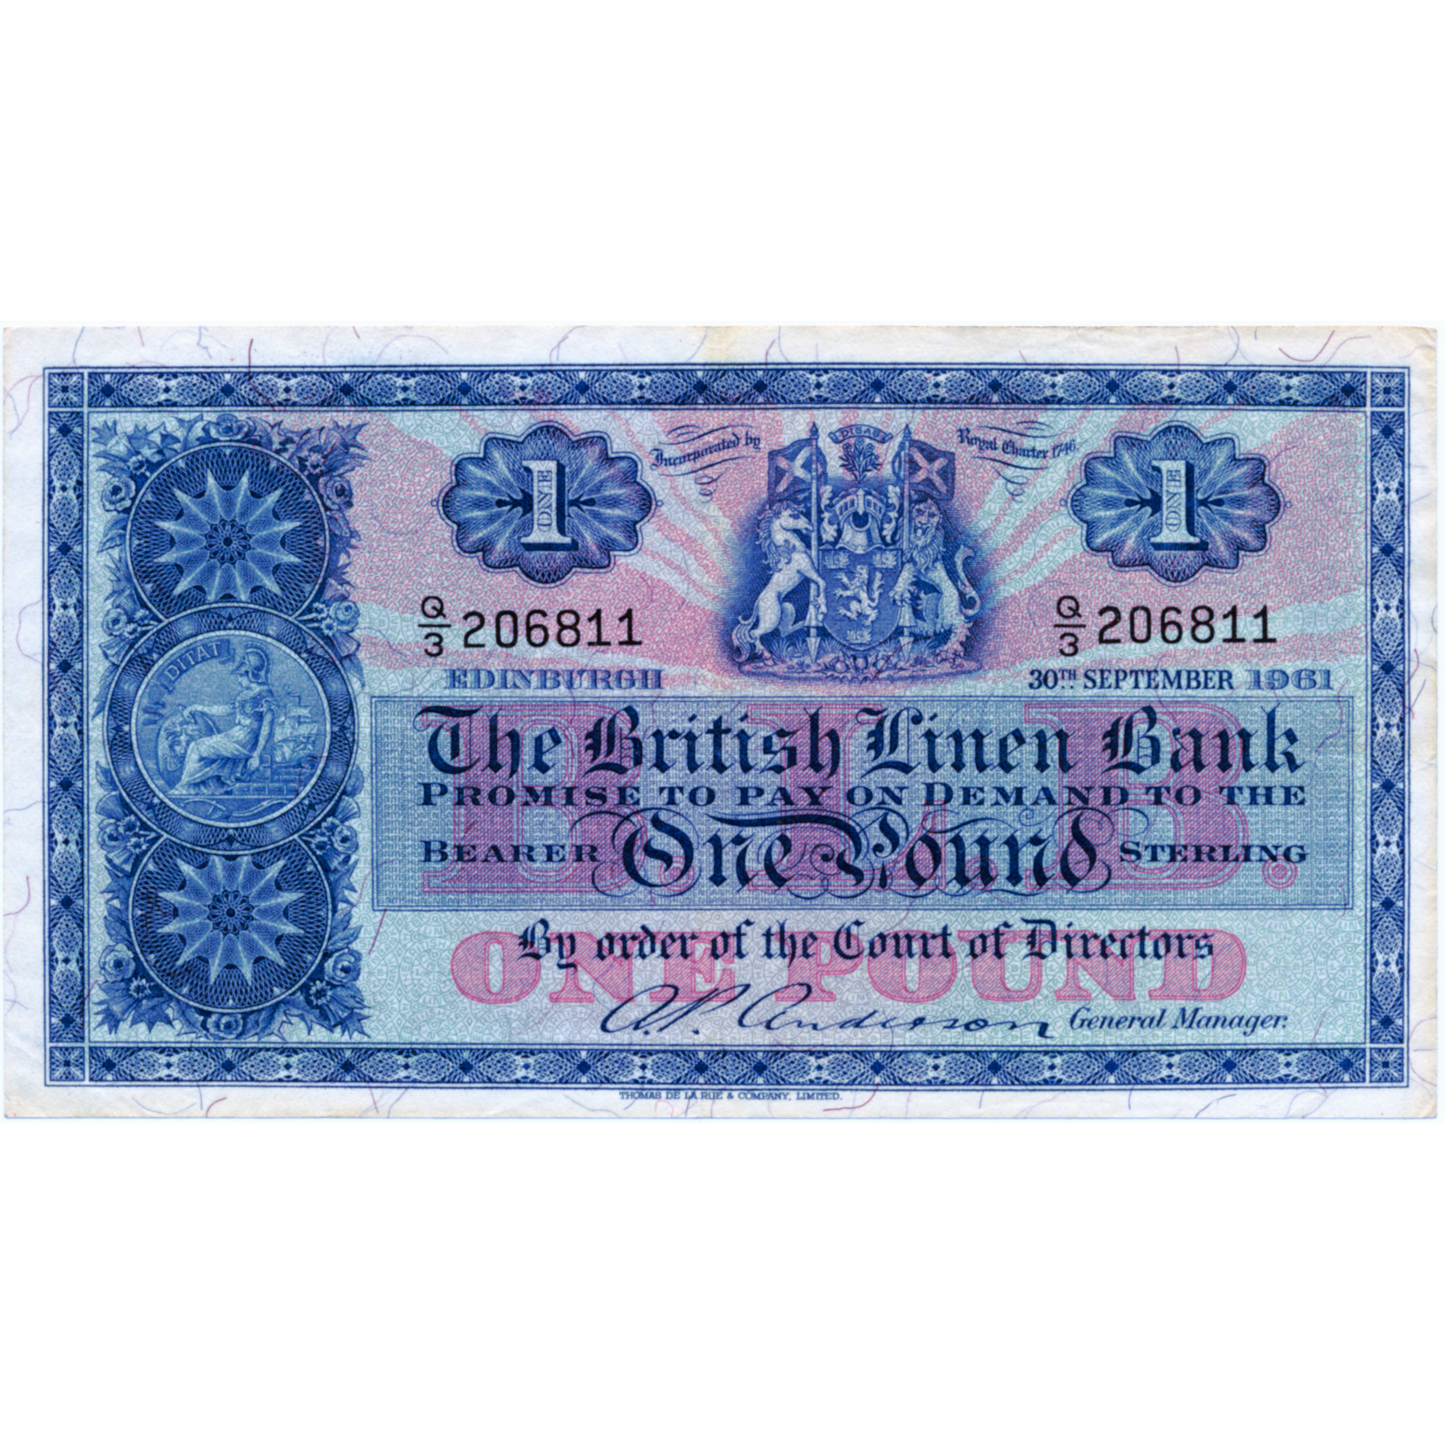 SCOTLAND P.162 SC207 1961 British Linen Bank First series £1 EF Q/3